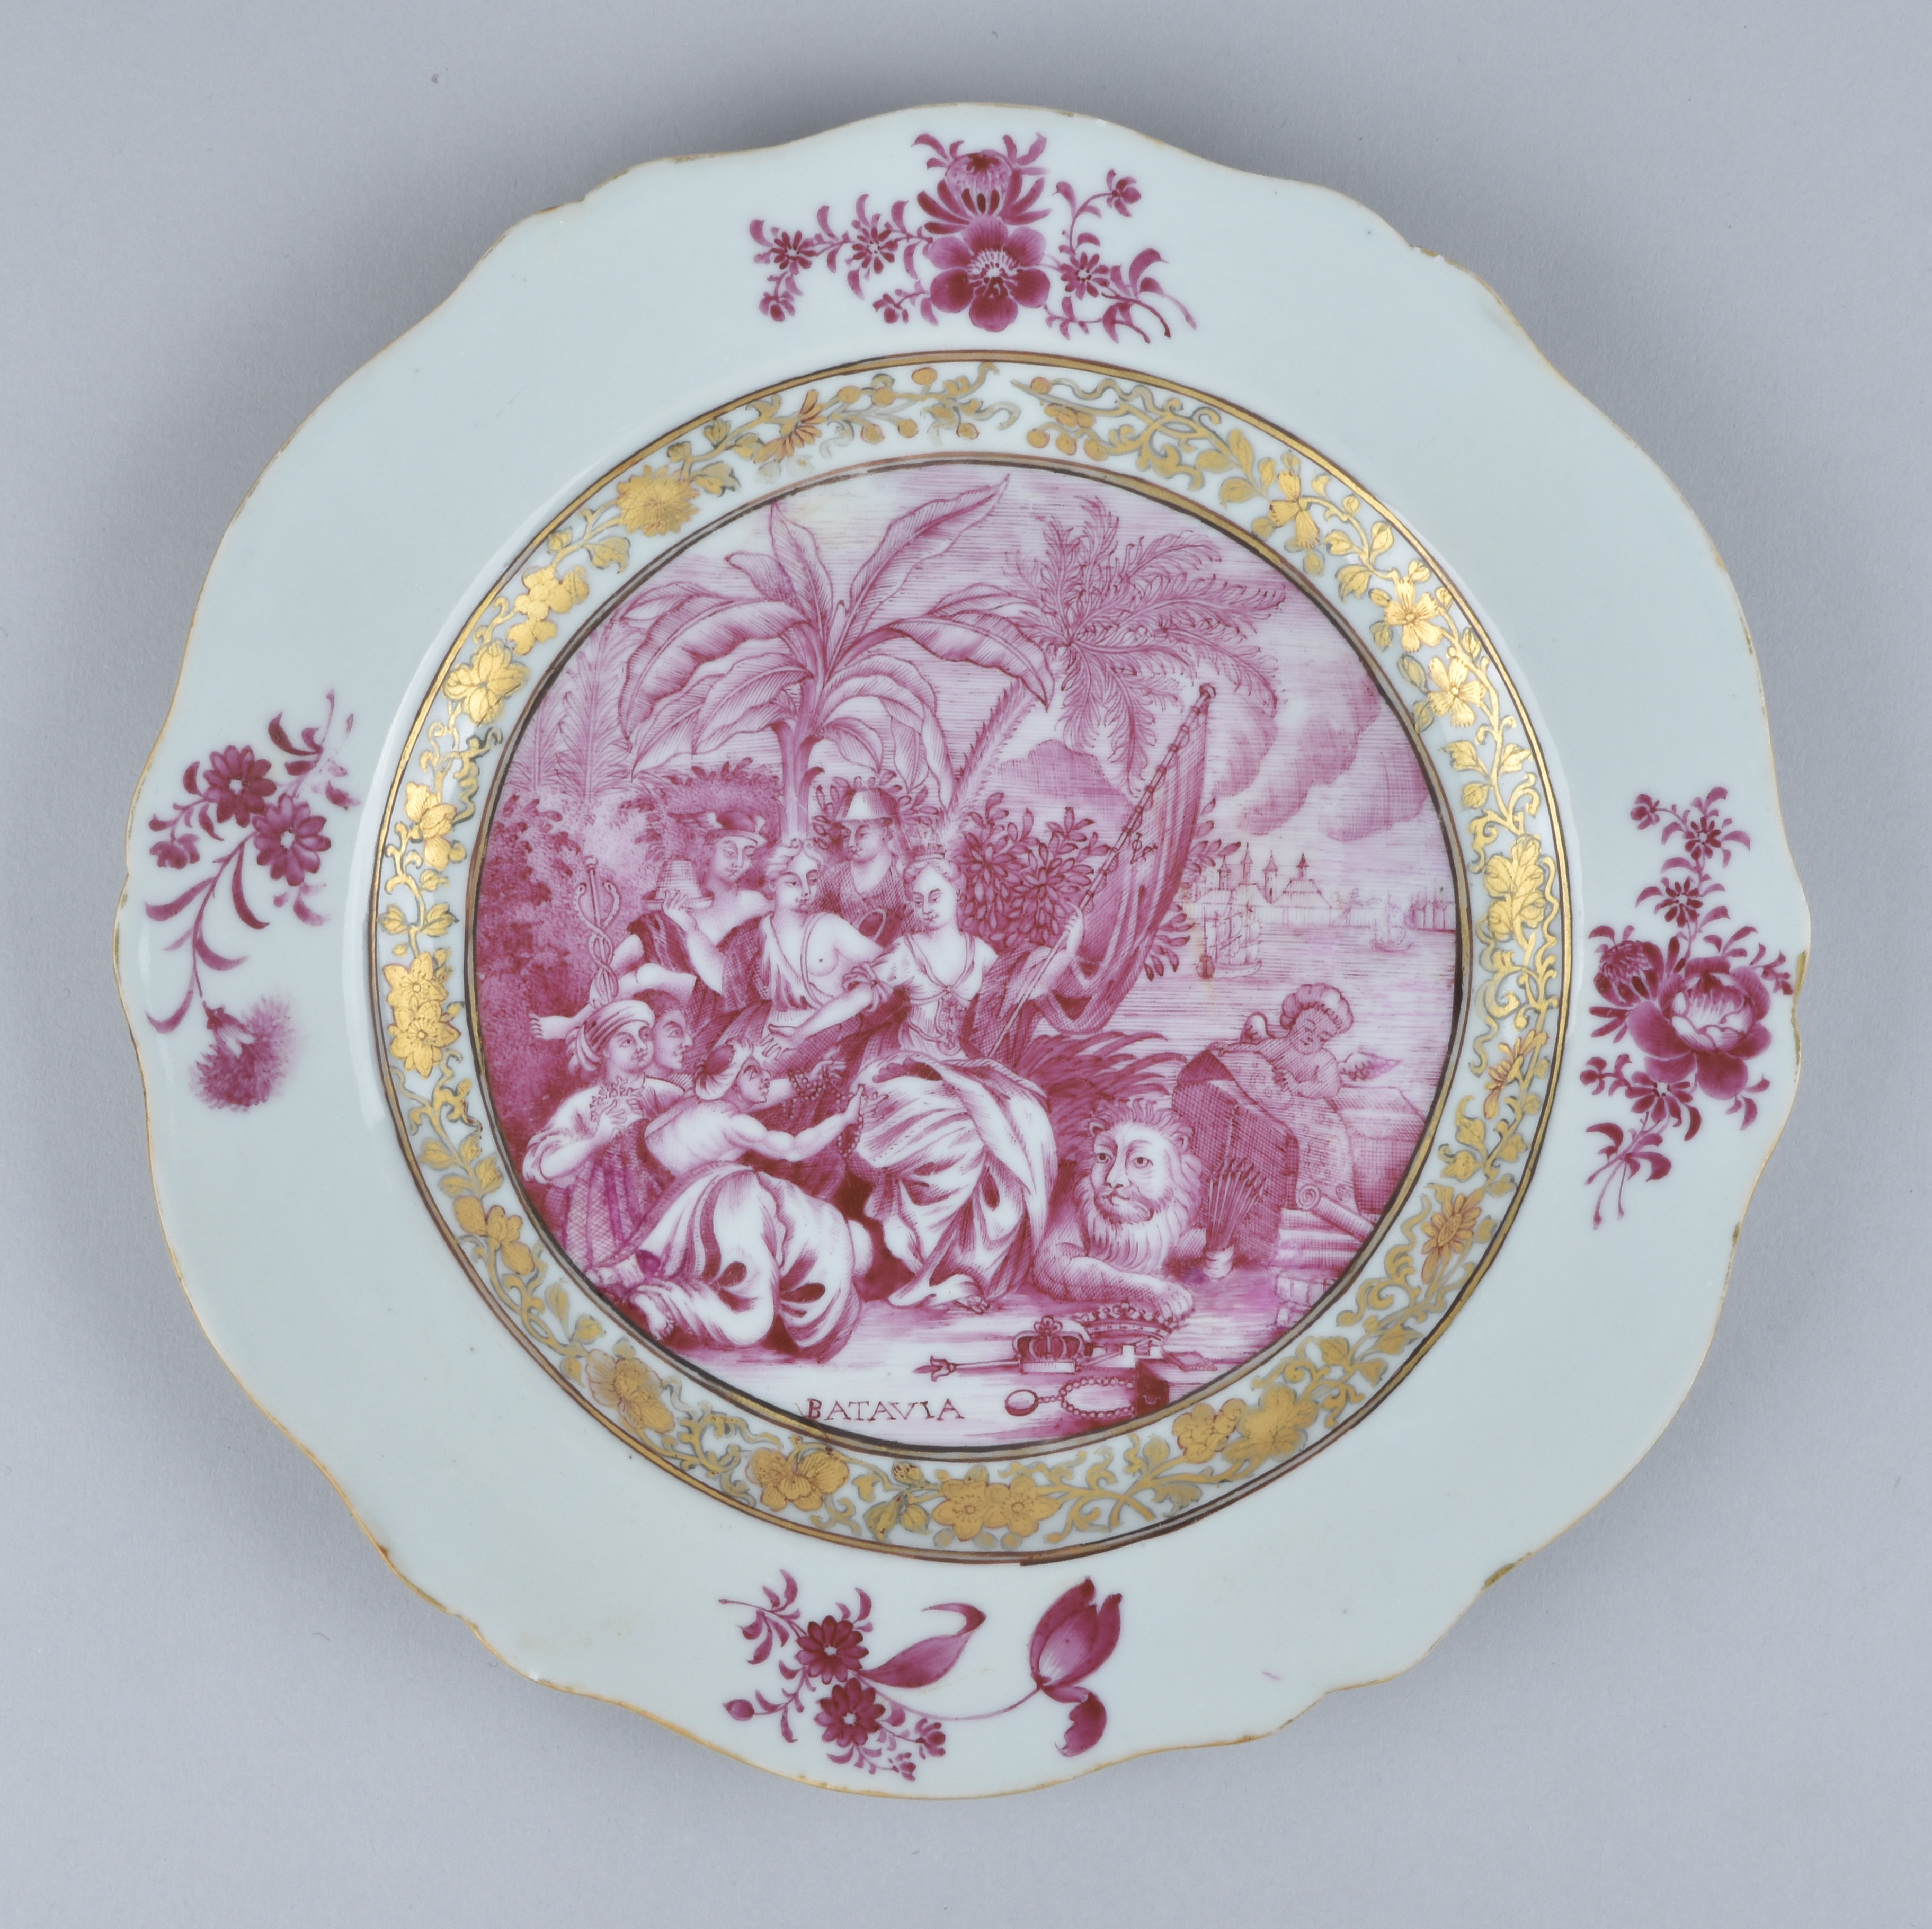 Porcelaine Qianlong (1735-1795), ca. 1740/1750, Chine